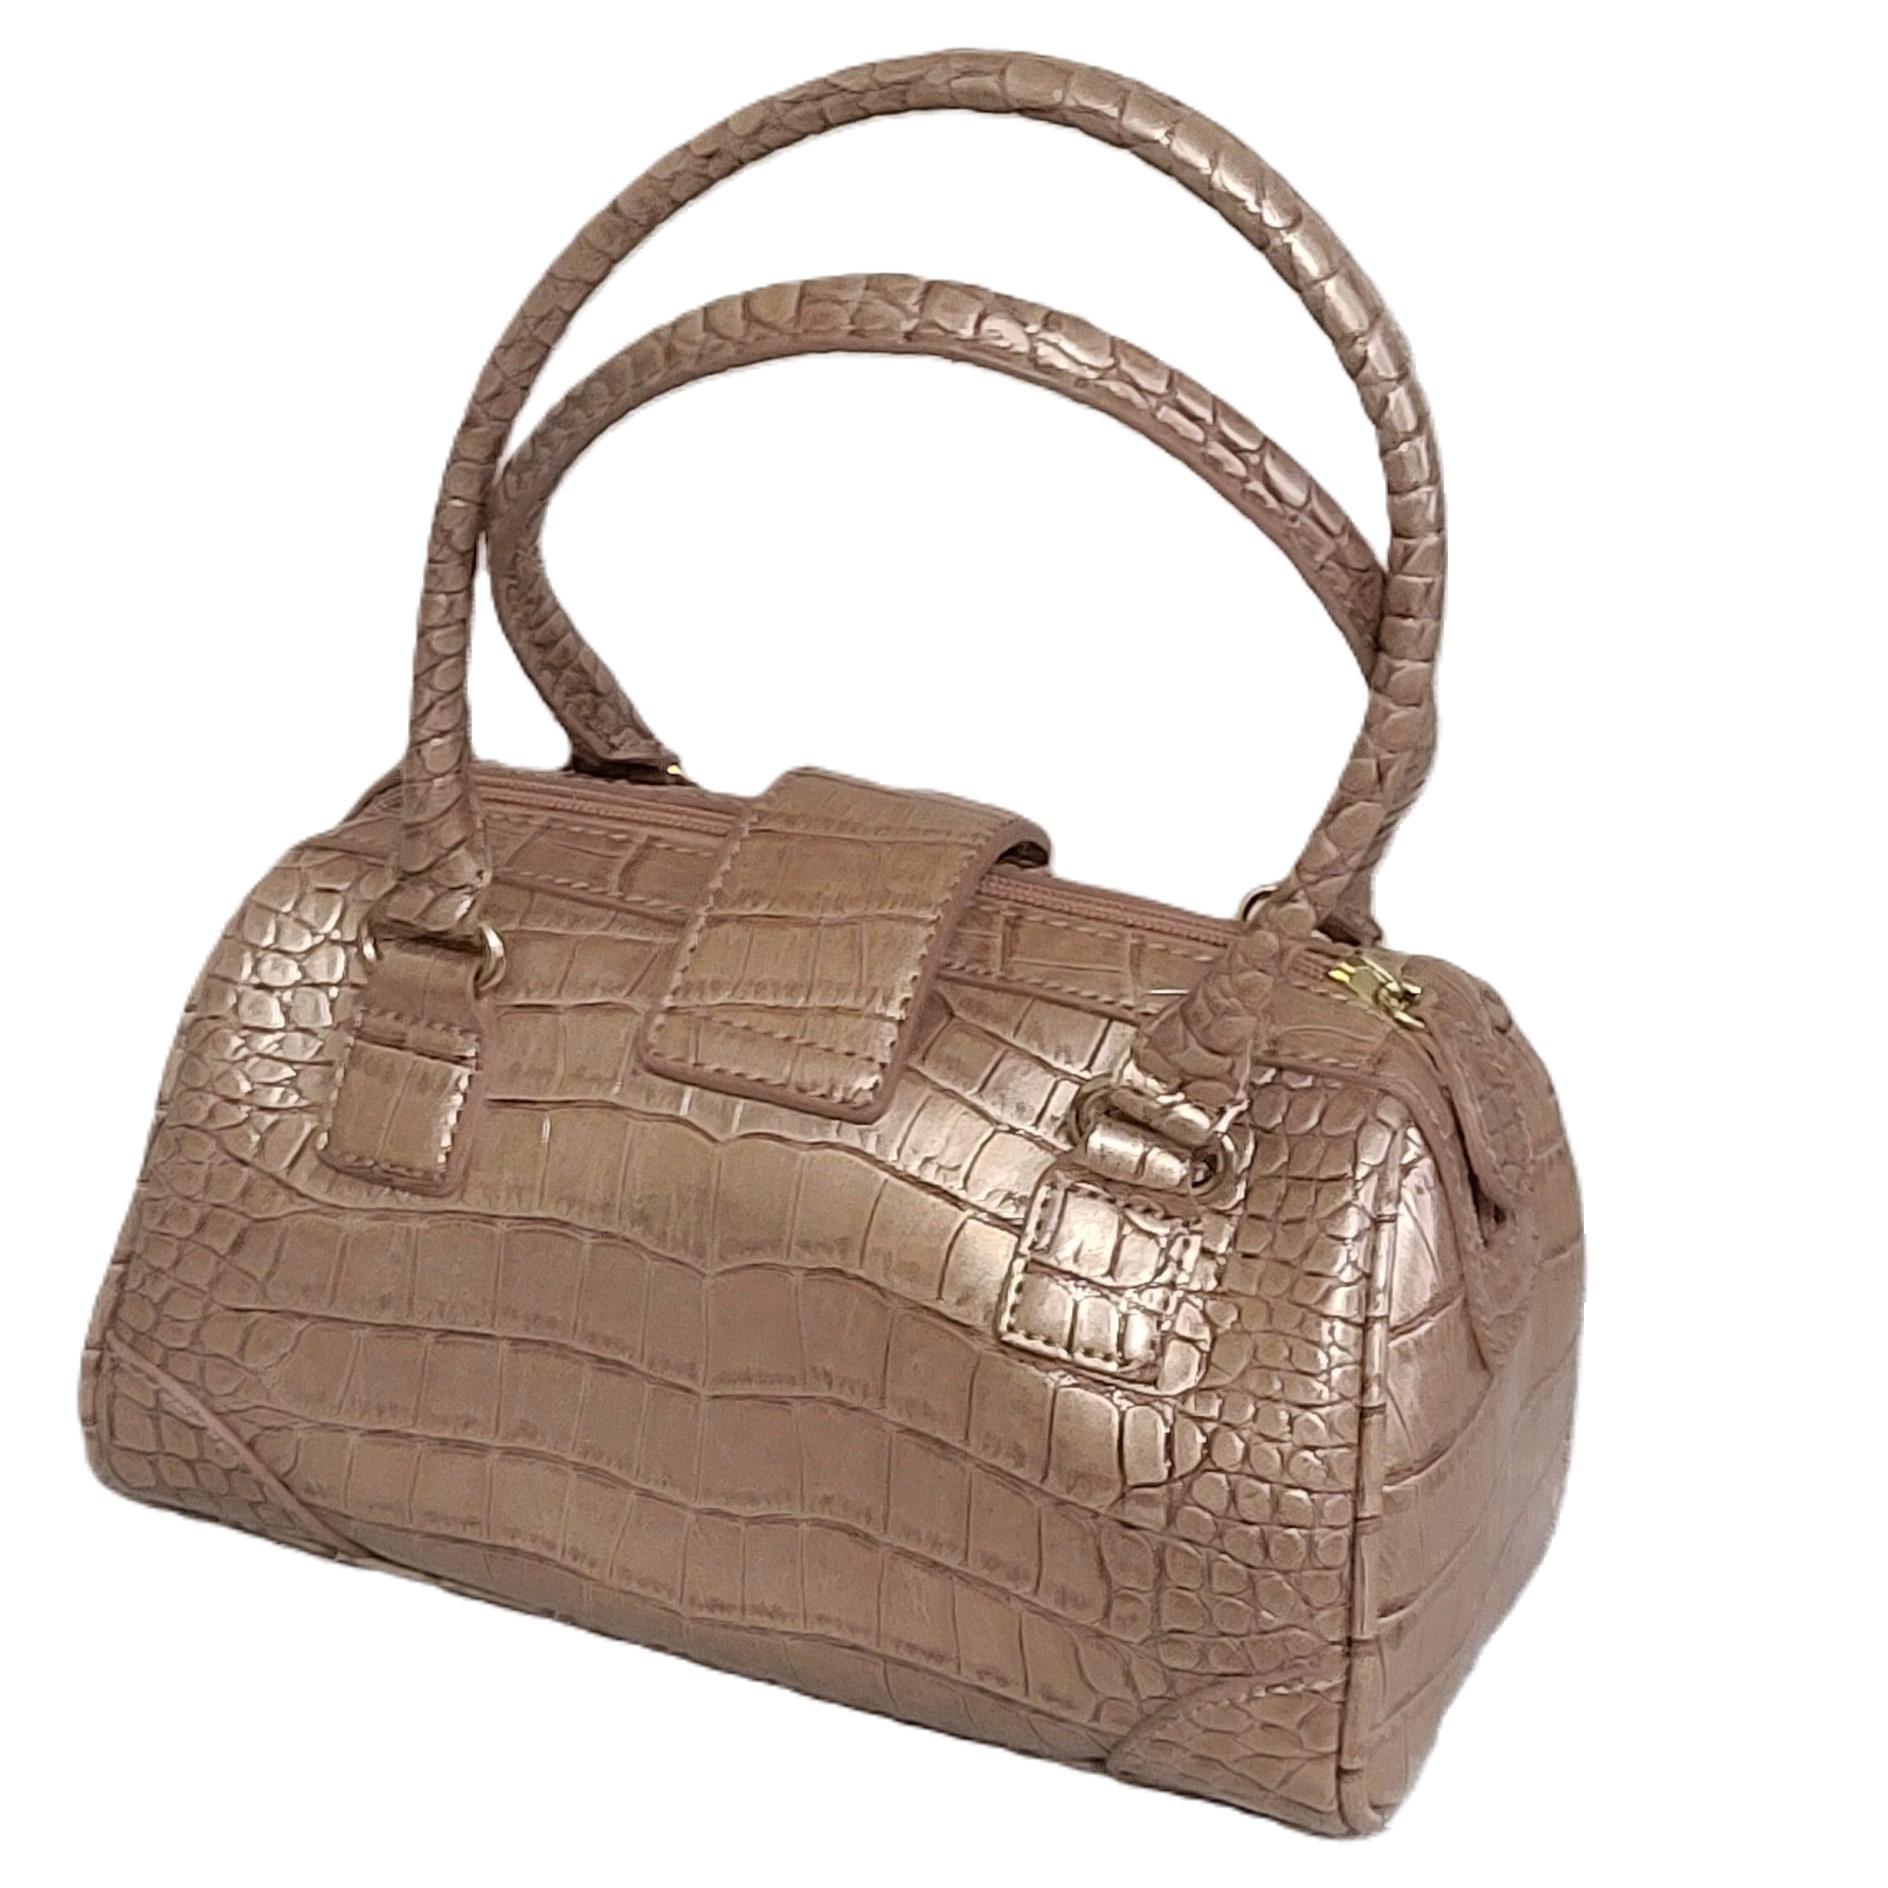 Liz Claiborne Pearlized Croc Handbag NWT